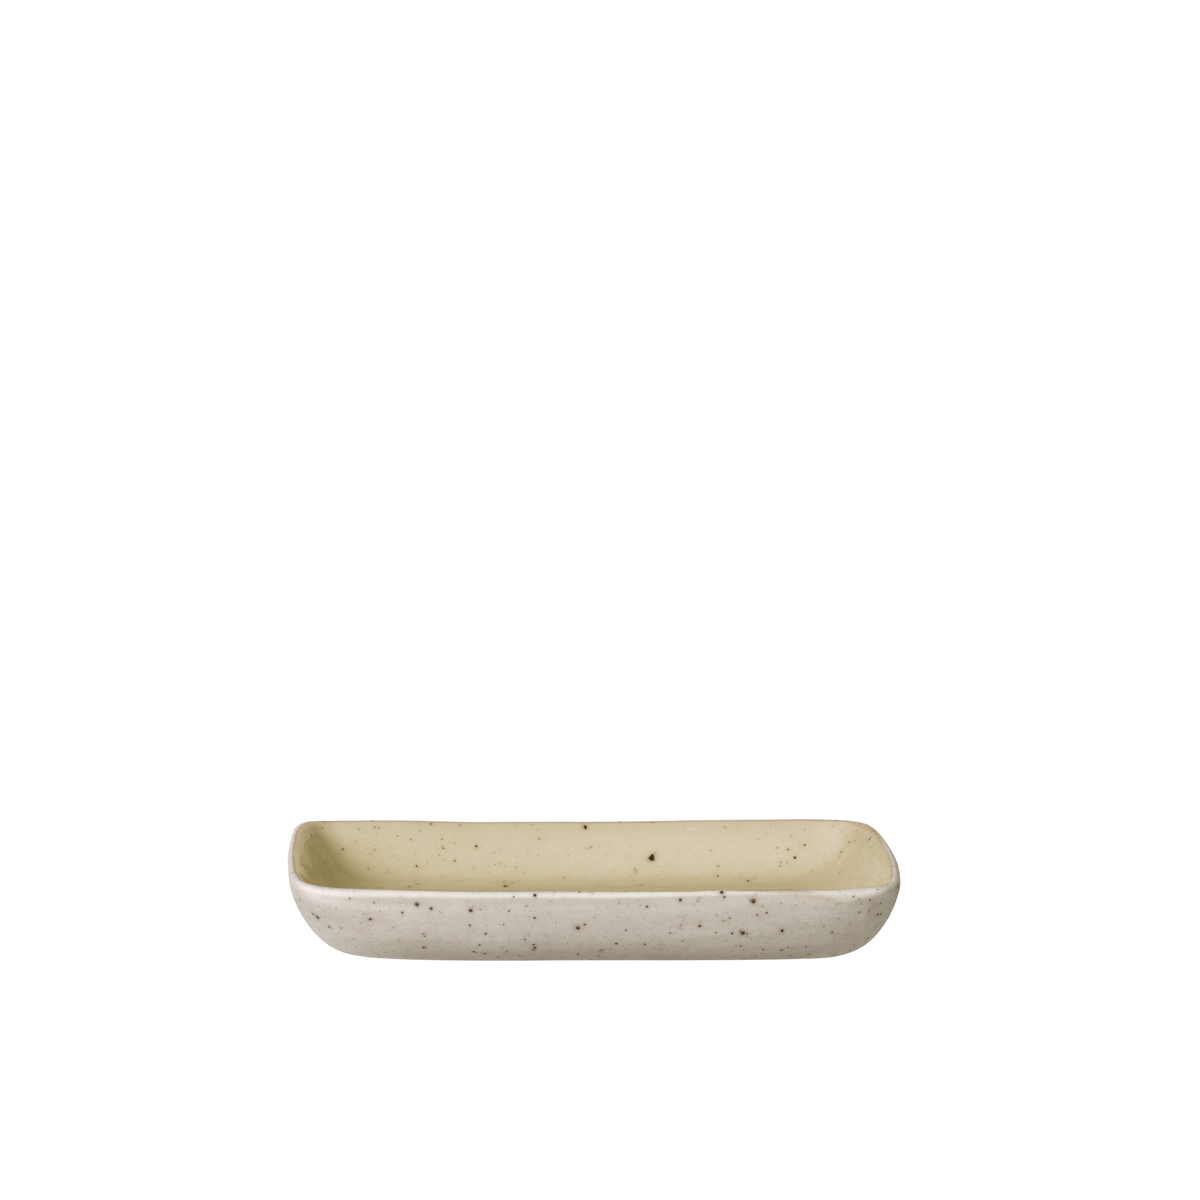 Snack Teller -SABLO- Savannah Size S. Material: Keramik. Von Blomus.